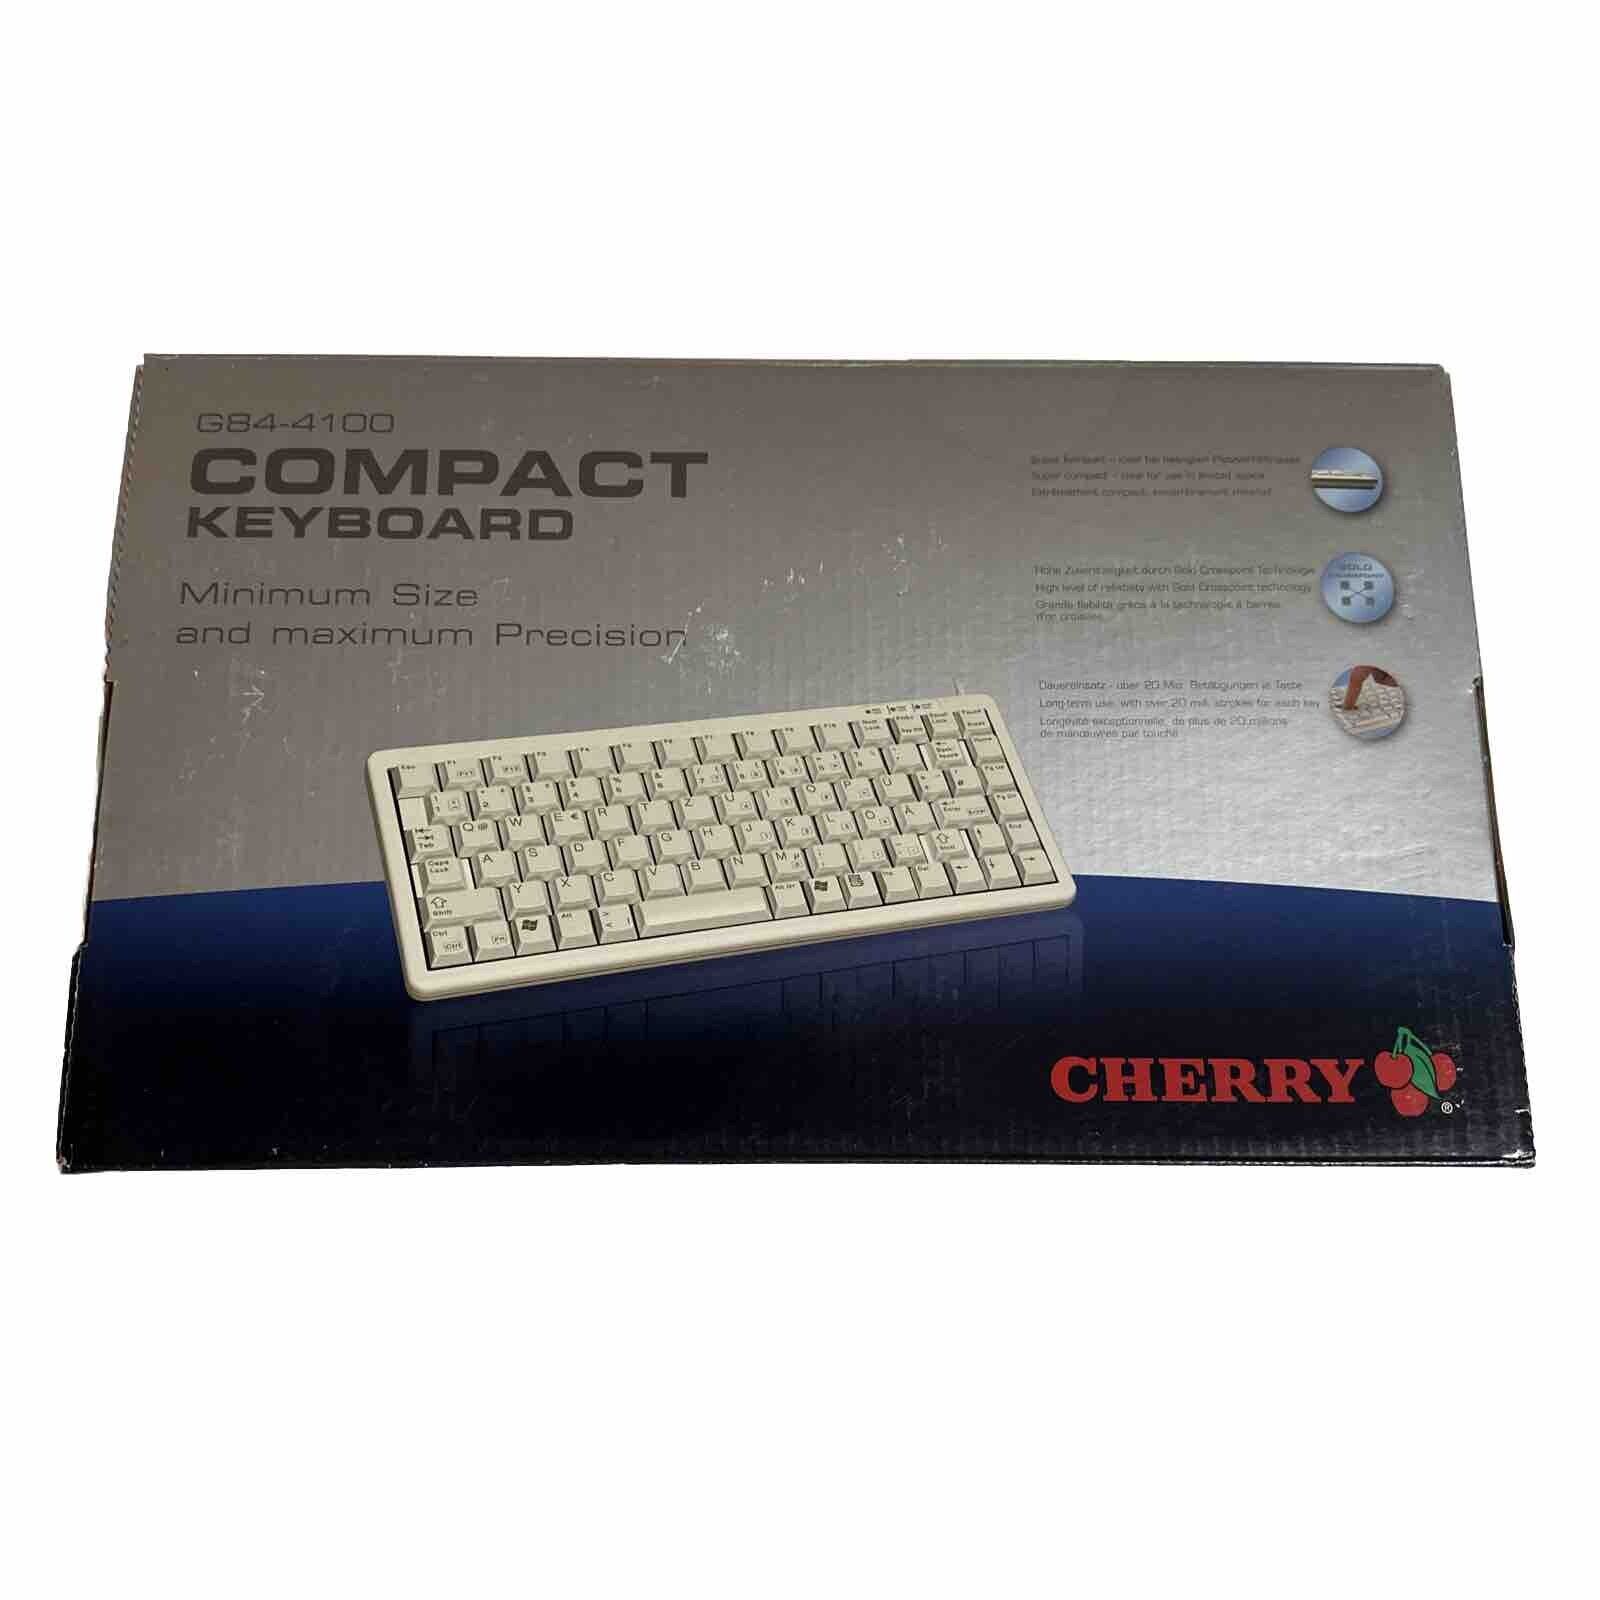 Cherry Compact-Keyboard G84-4400 Keyboard PS/2 English NOS  Ships FREE